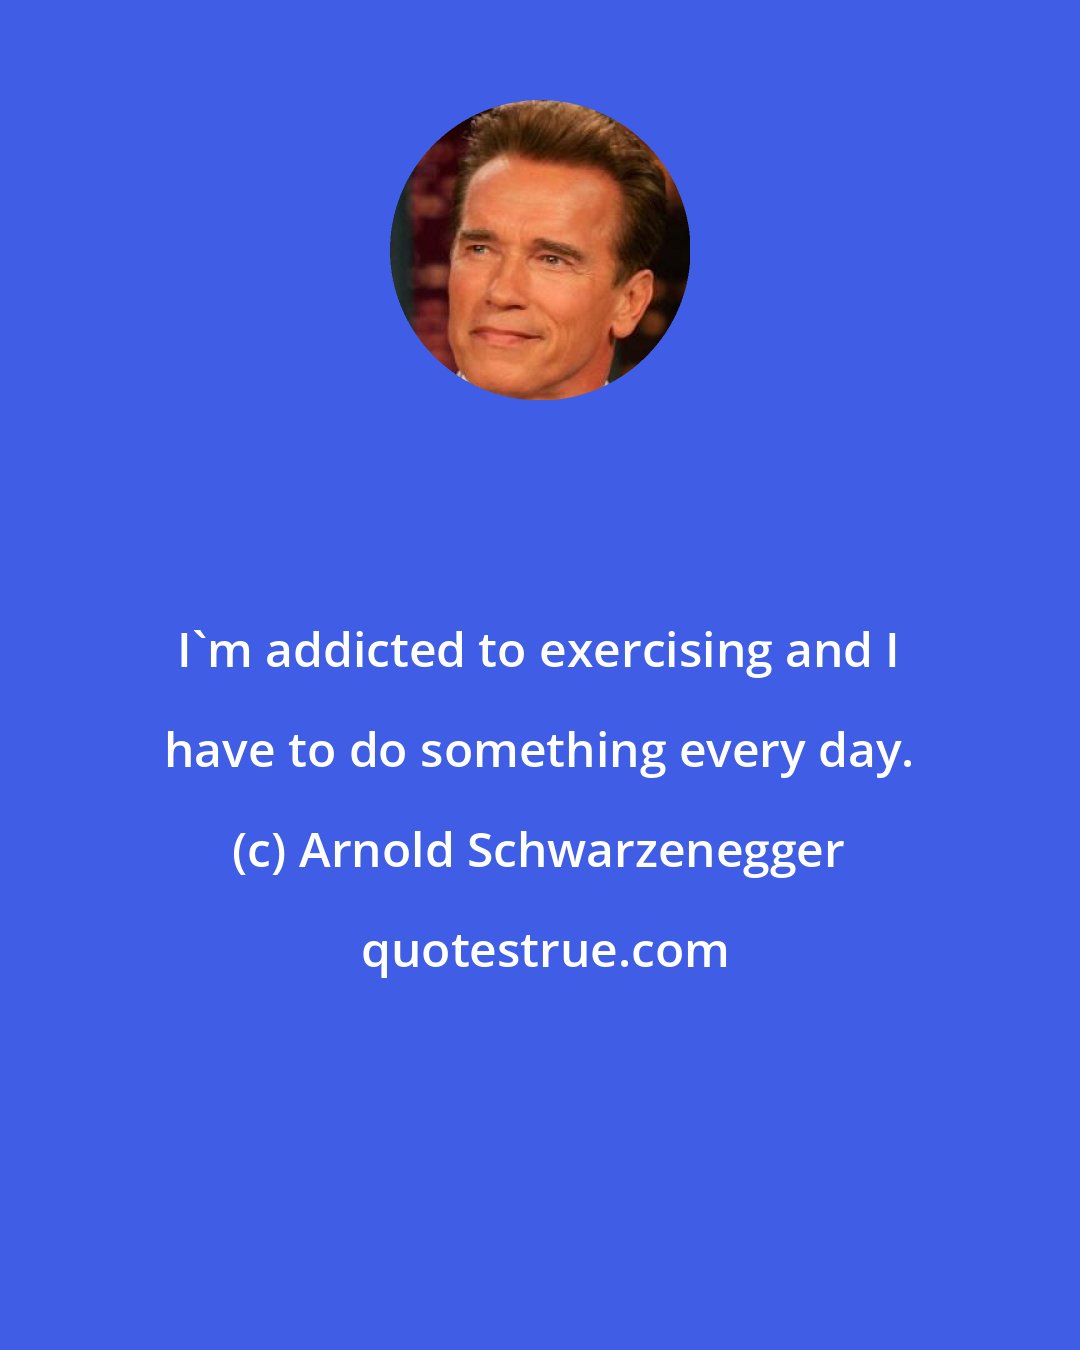 Arnold Schwarzenegger: I'm addicted to exercising and I have to do something every day.